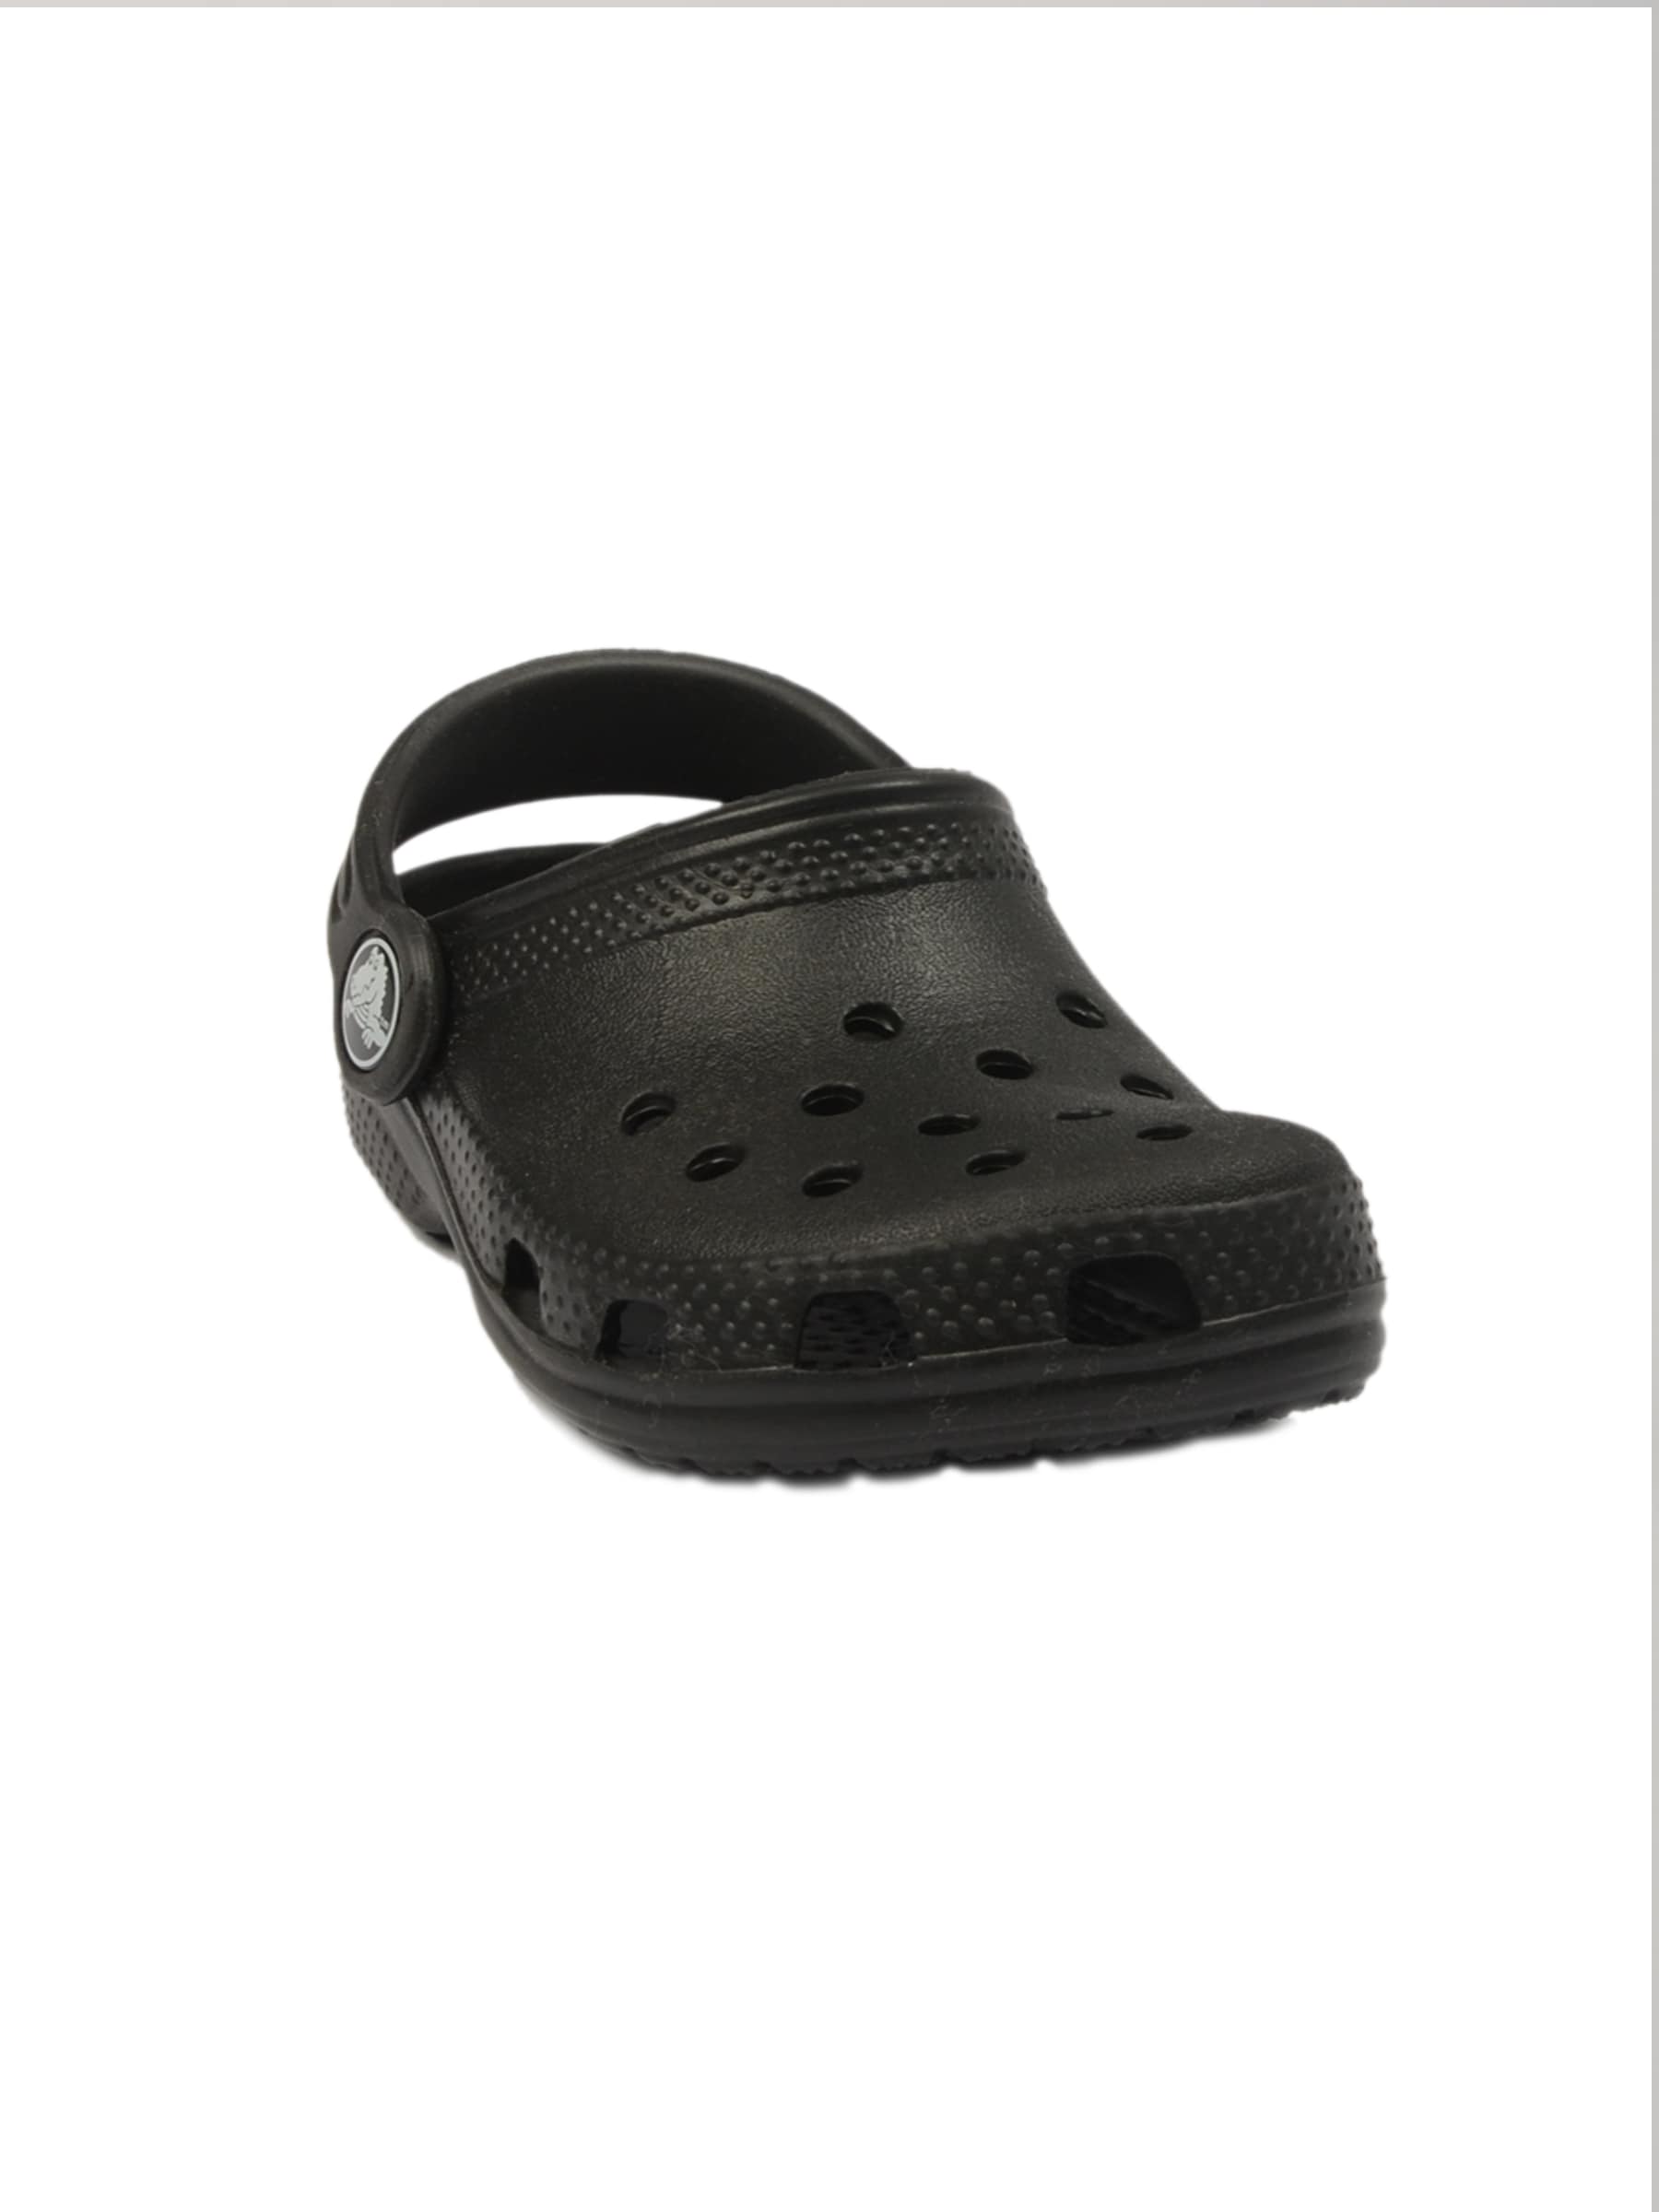 Crocs Kids Cayman black Sandals